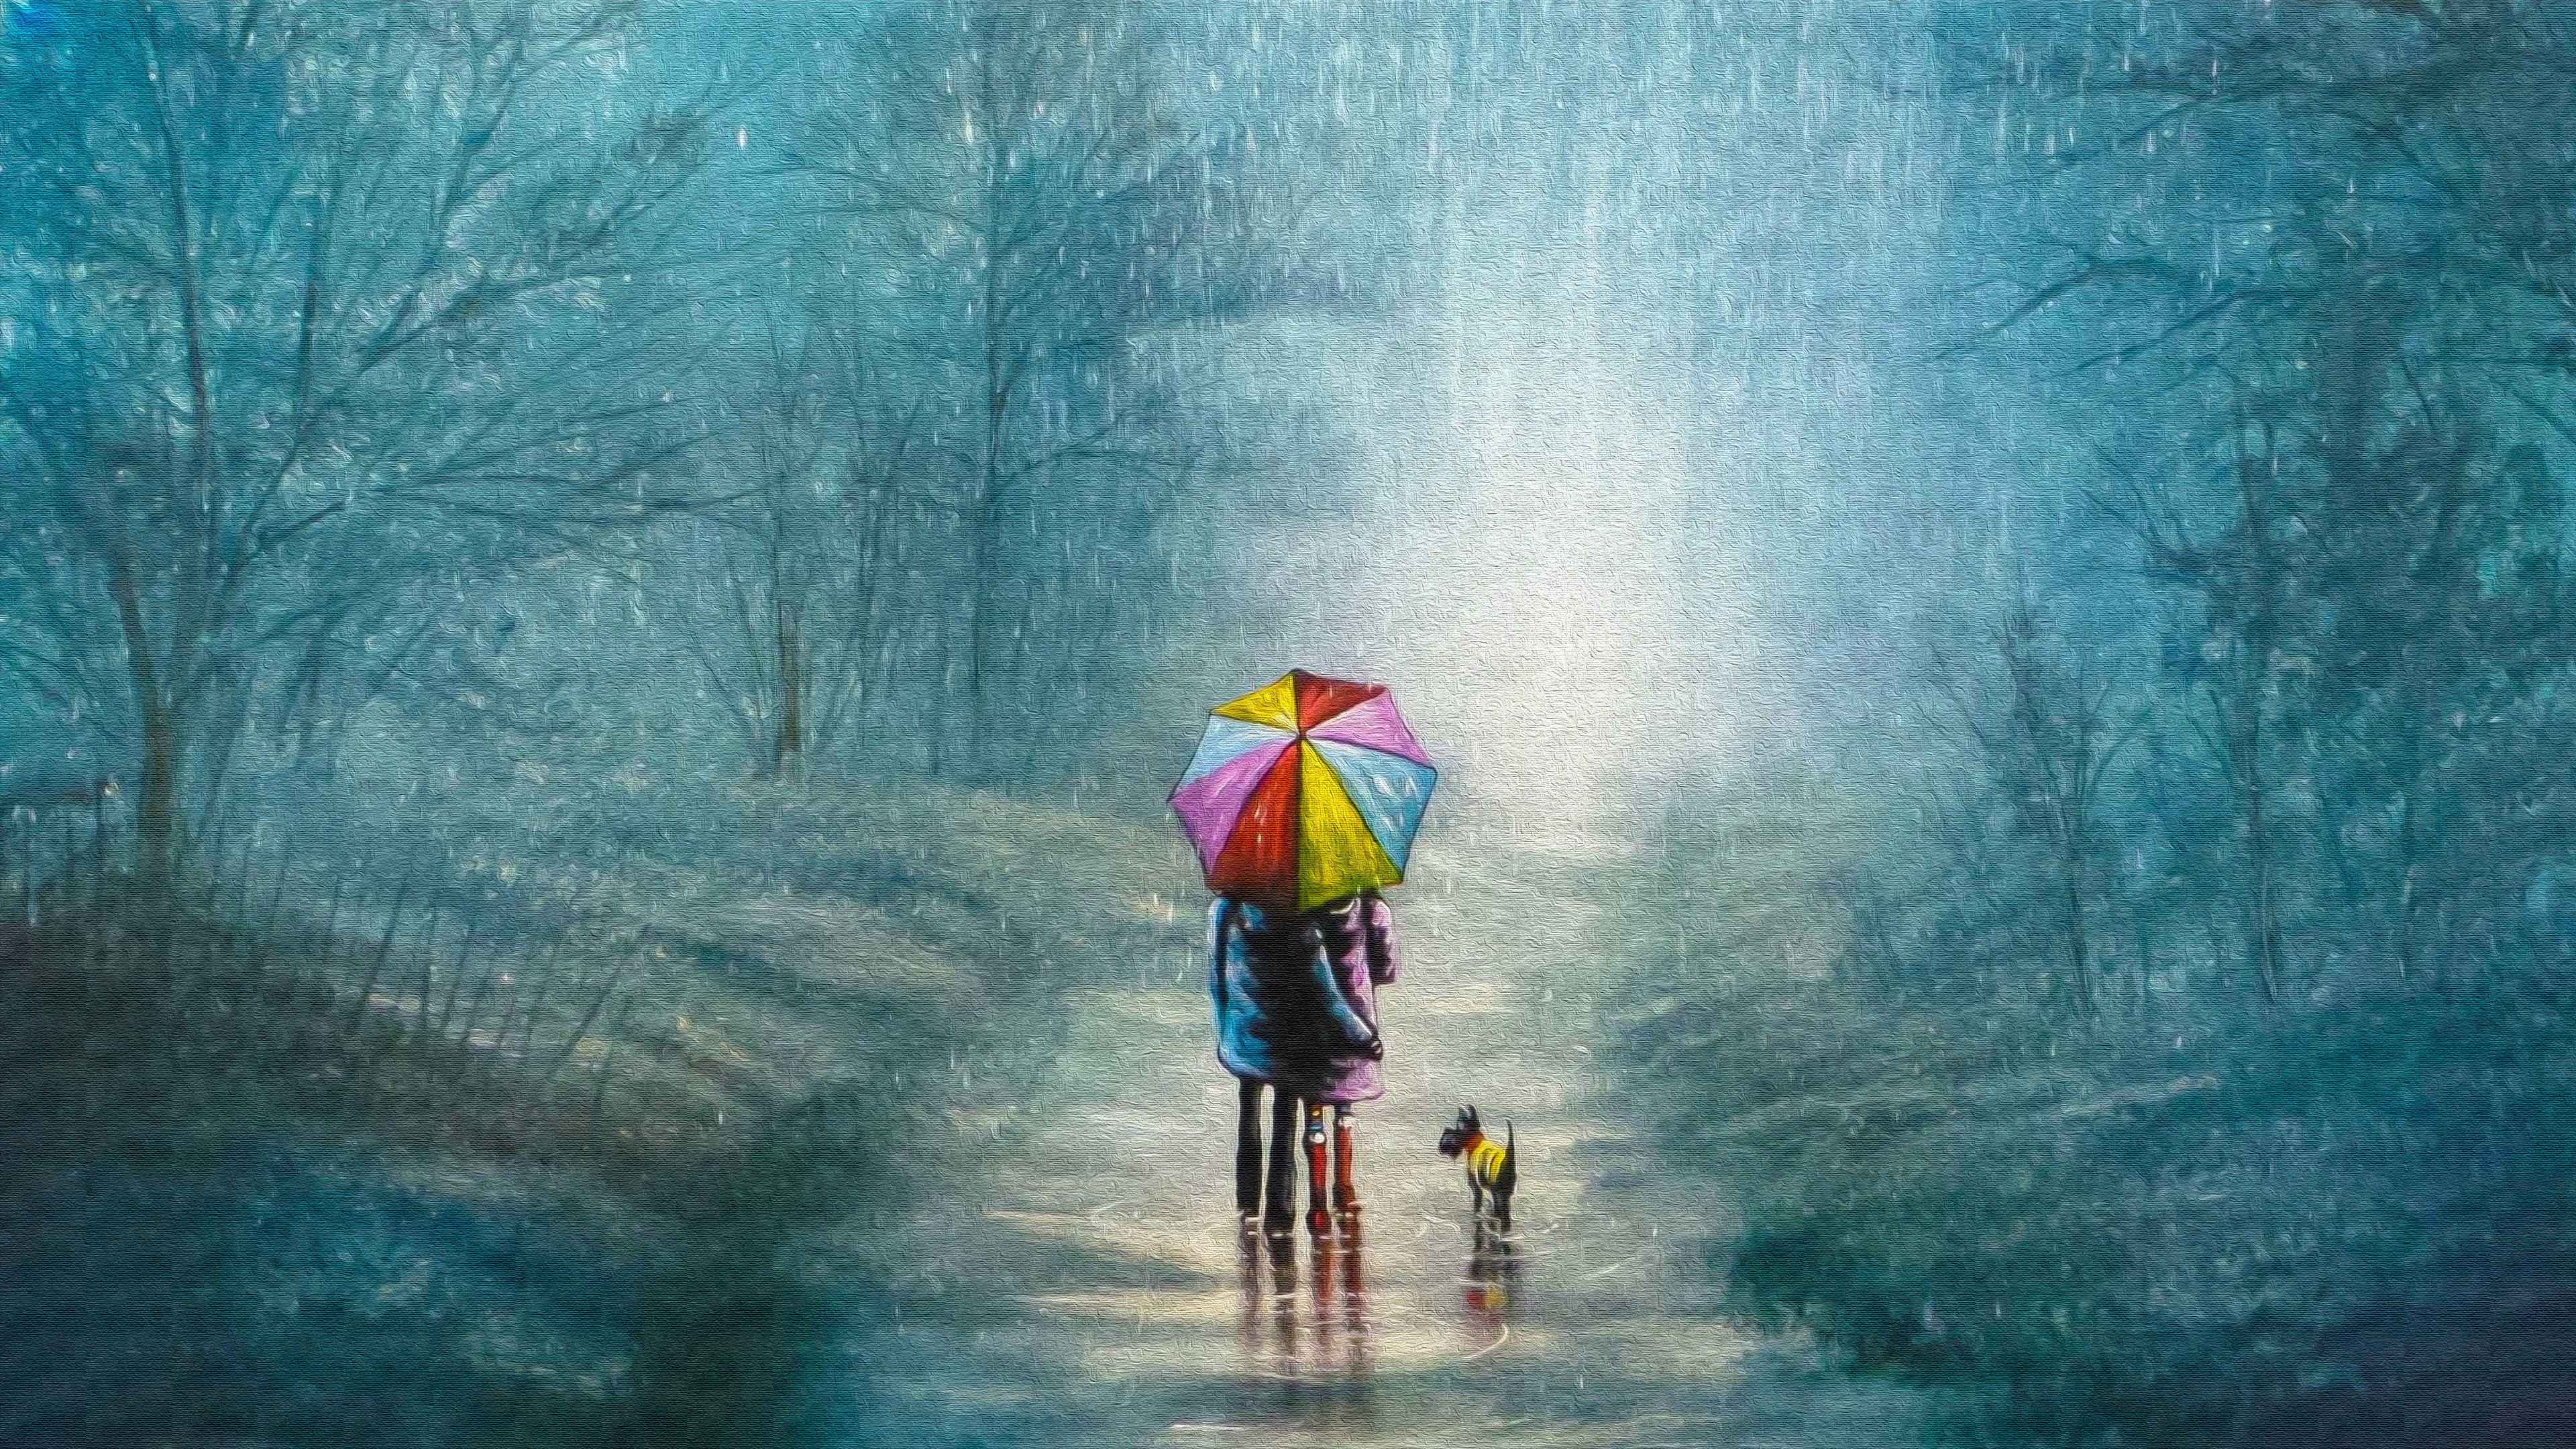 3840x2160 Rainy Day Oil on Canvas by Manufan63